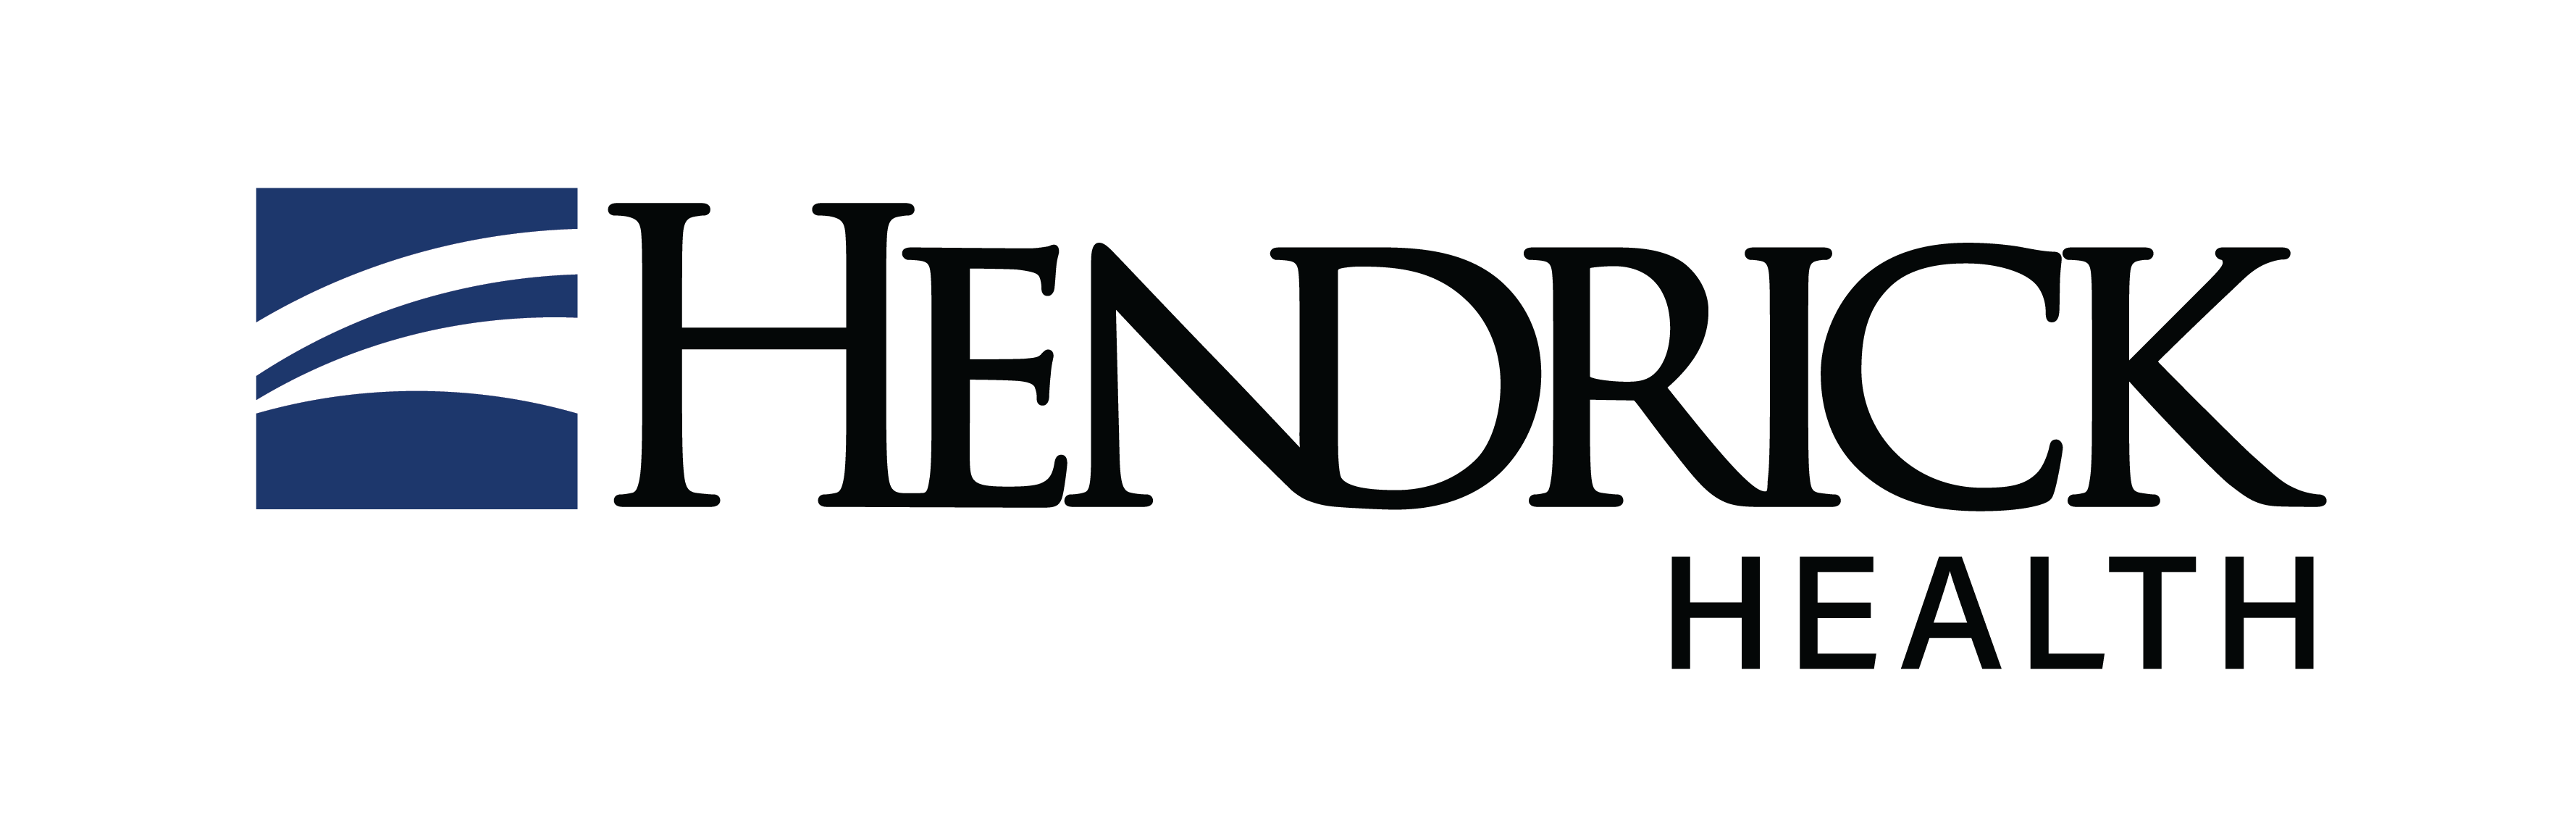 Hendrick Medical Center South logo